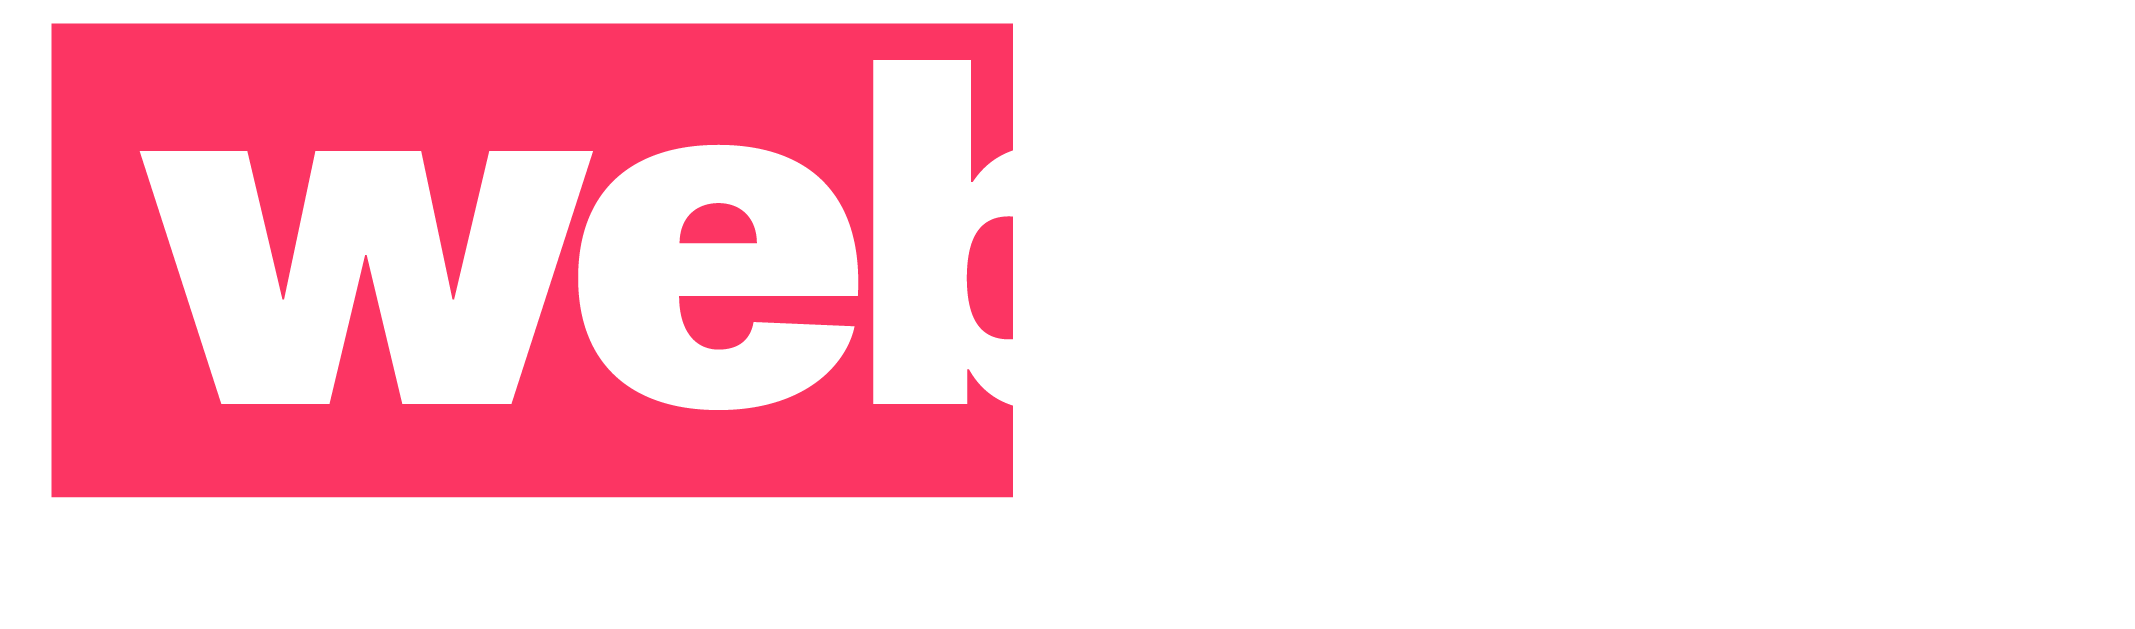 Webgen Logo